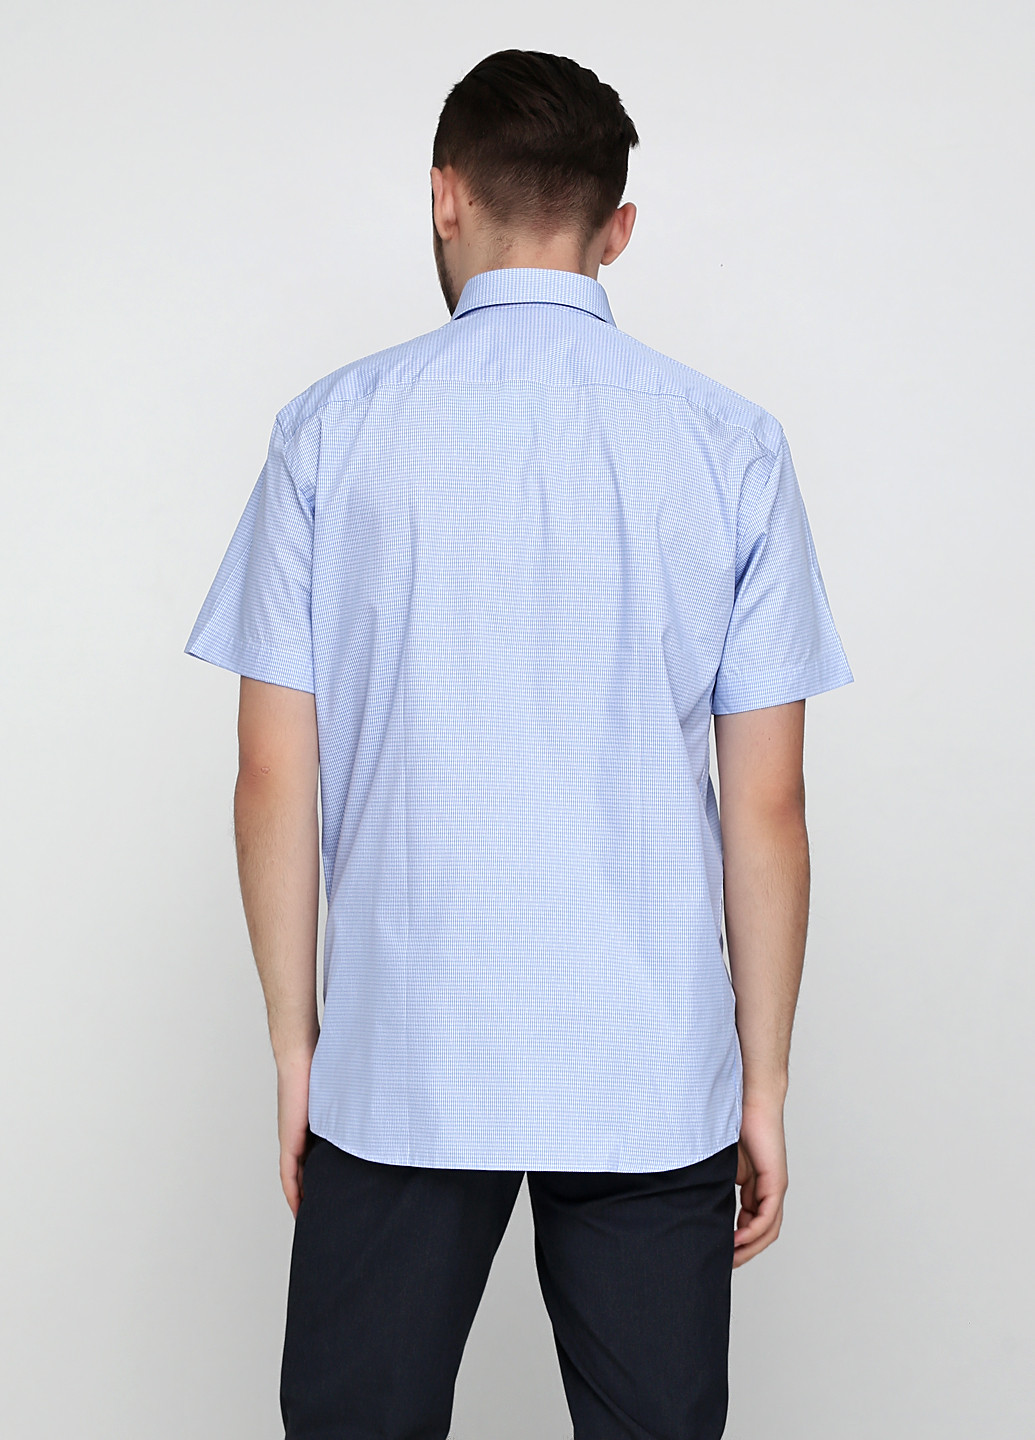 Небесно-голубой классическая рубашка с геометрическим узором Pierre Clarence с коротким рукавом